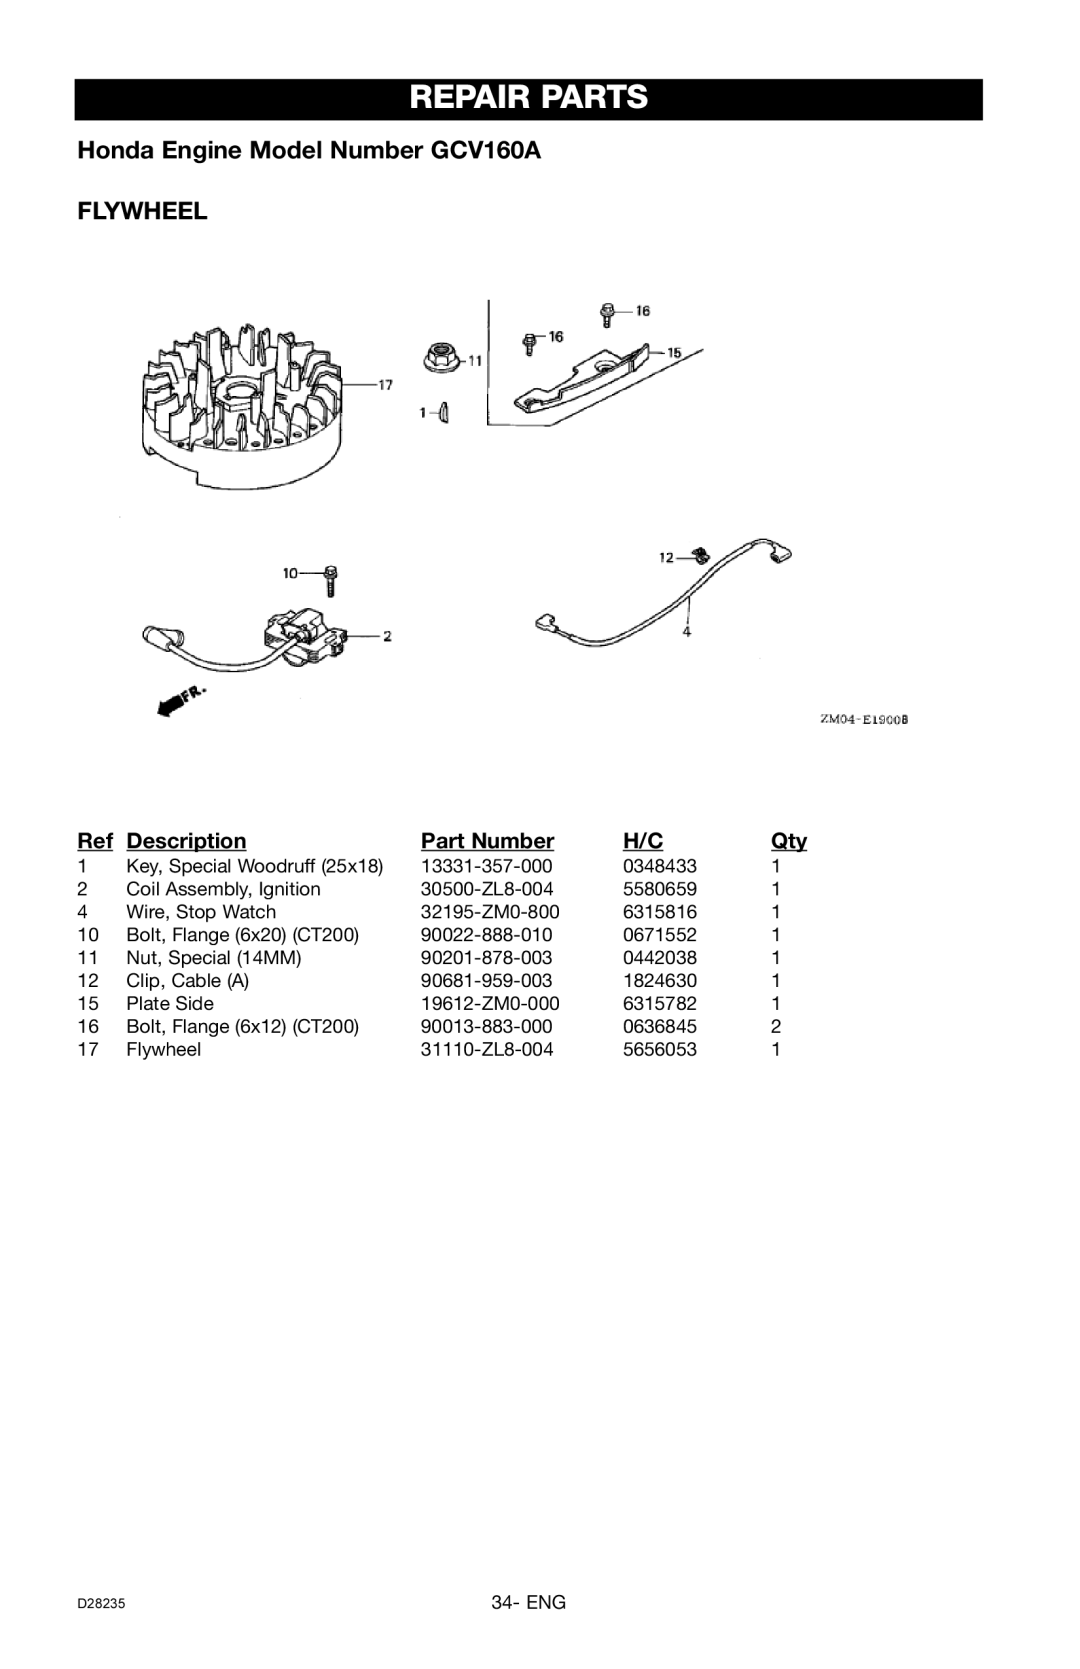 Craftsman D28235, 919.672241 owner manual Repair Parts, Honda Engine Model Number GCV160A FLYWHEEL, Description, Part Number 